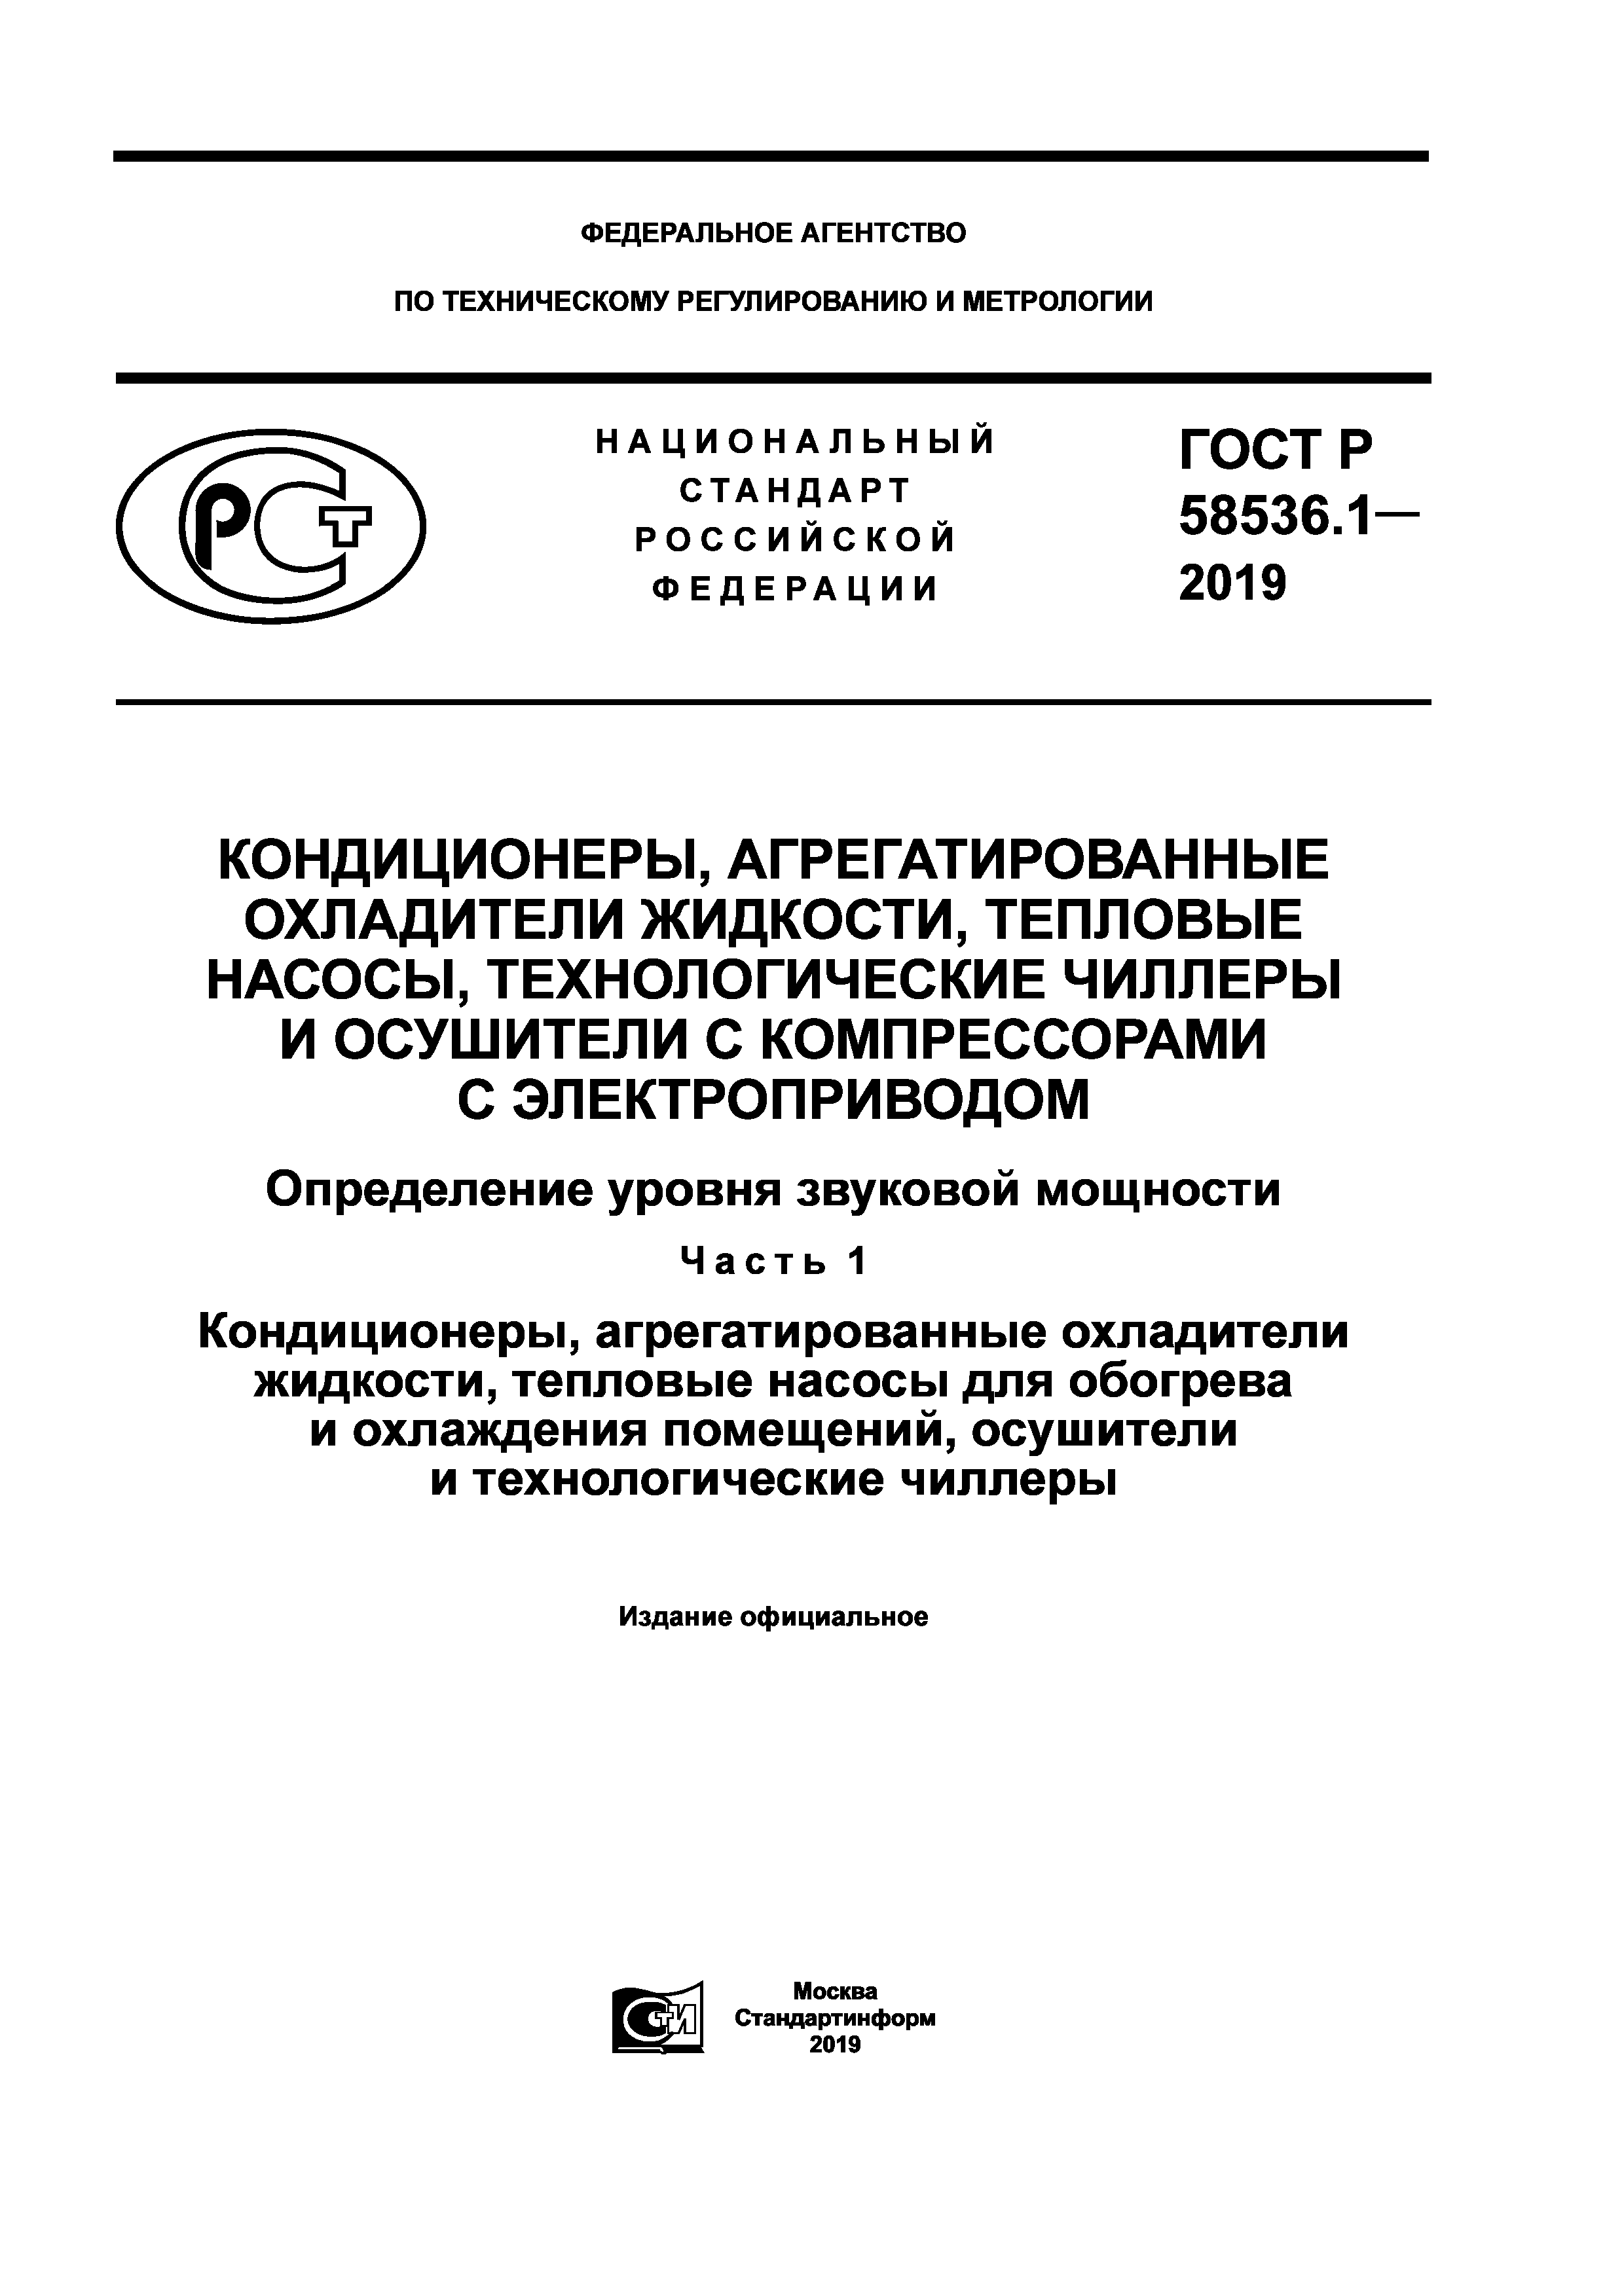 ГОСТ Р 58536.1-2019